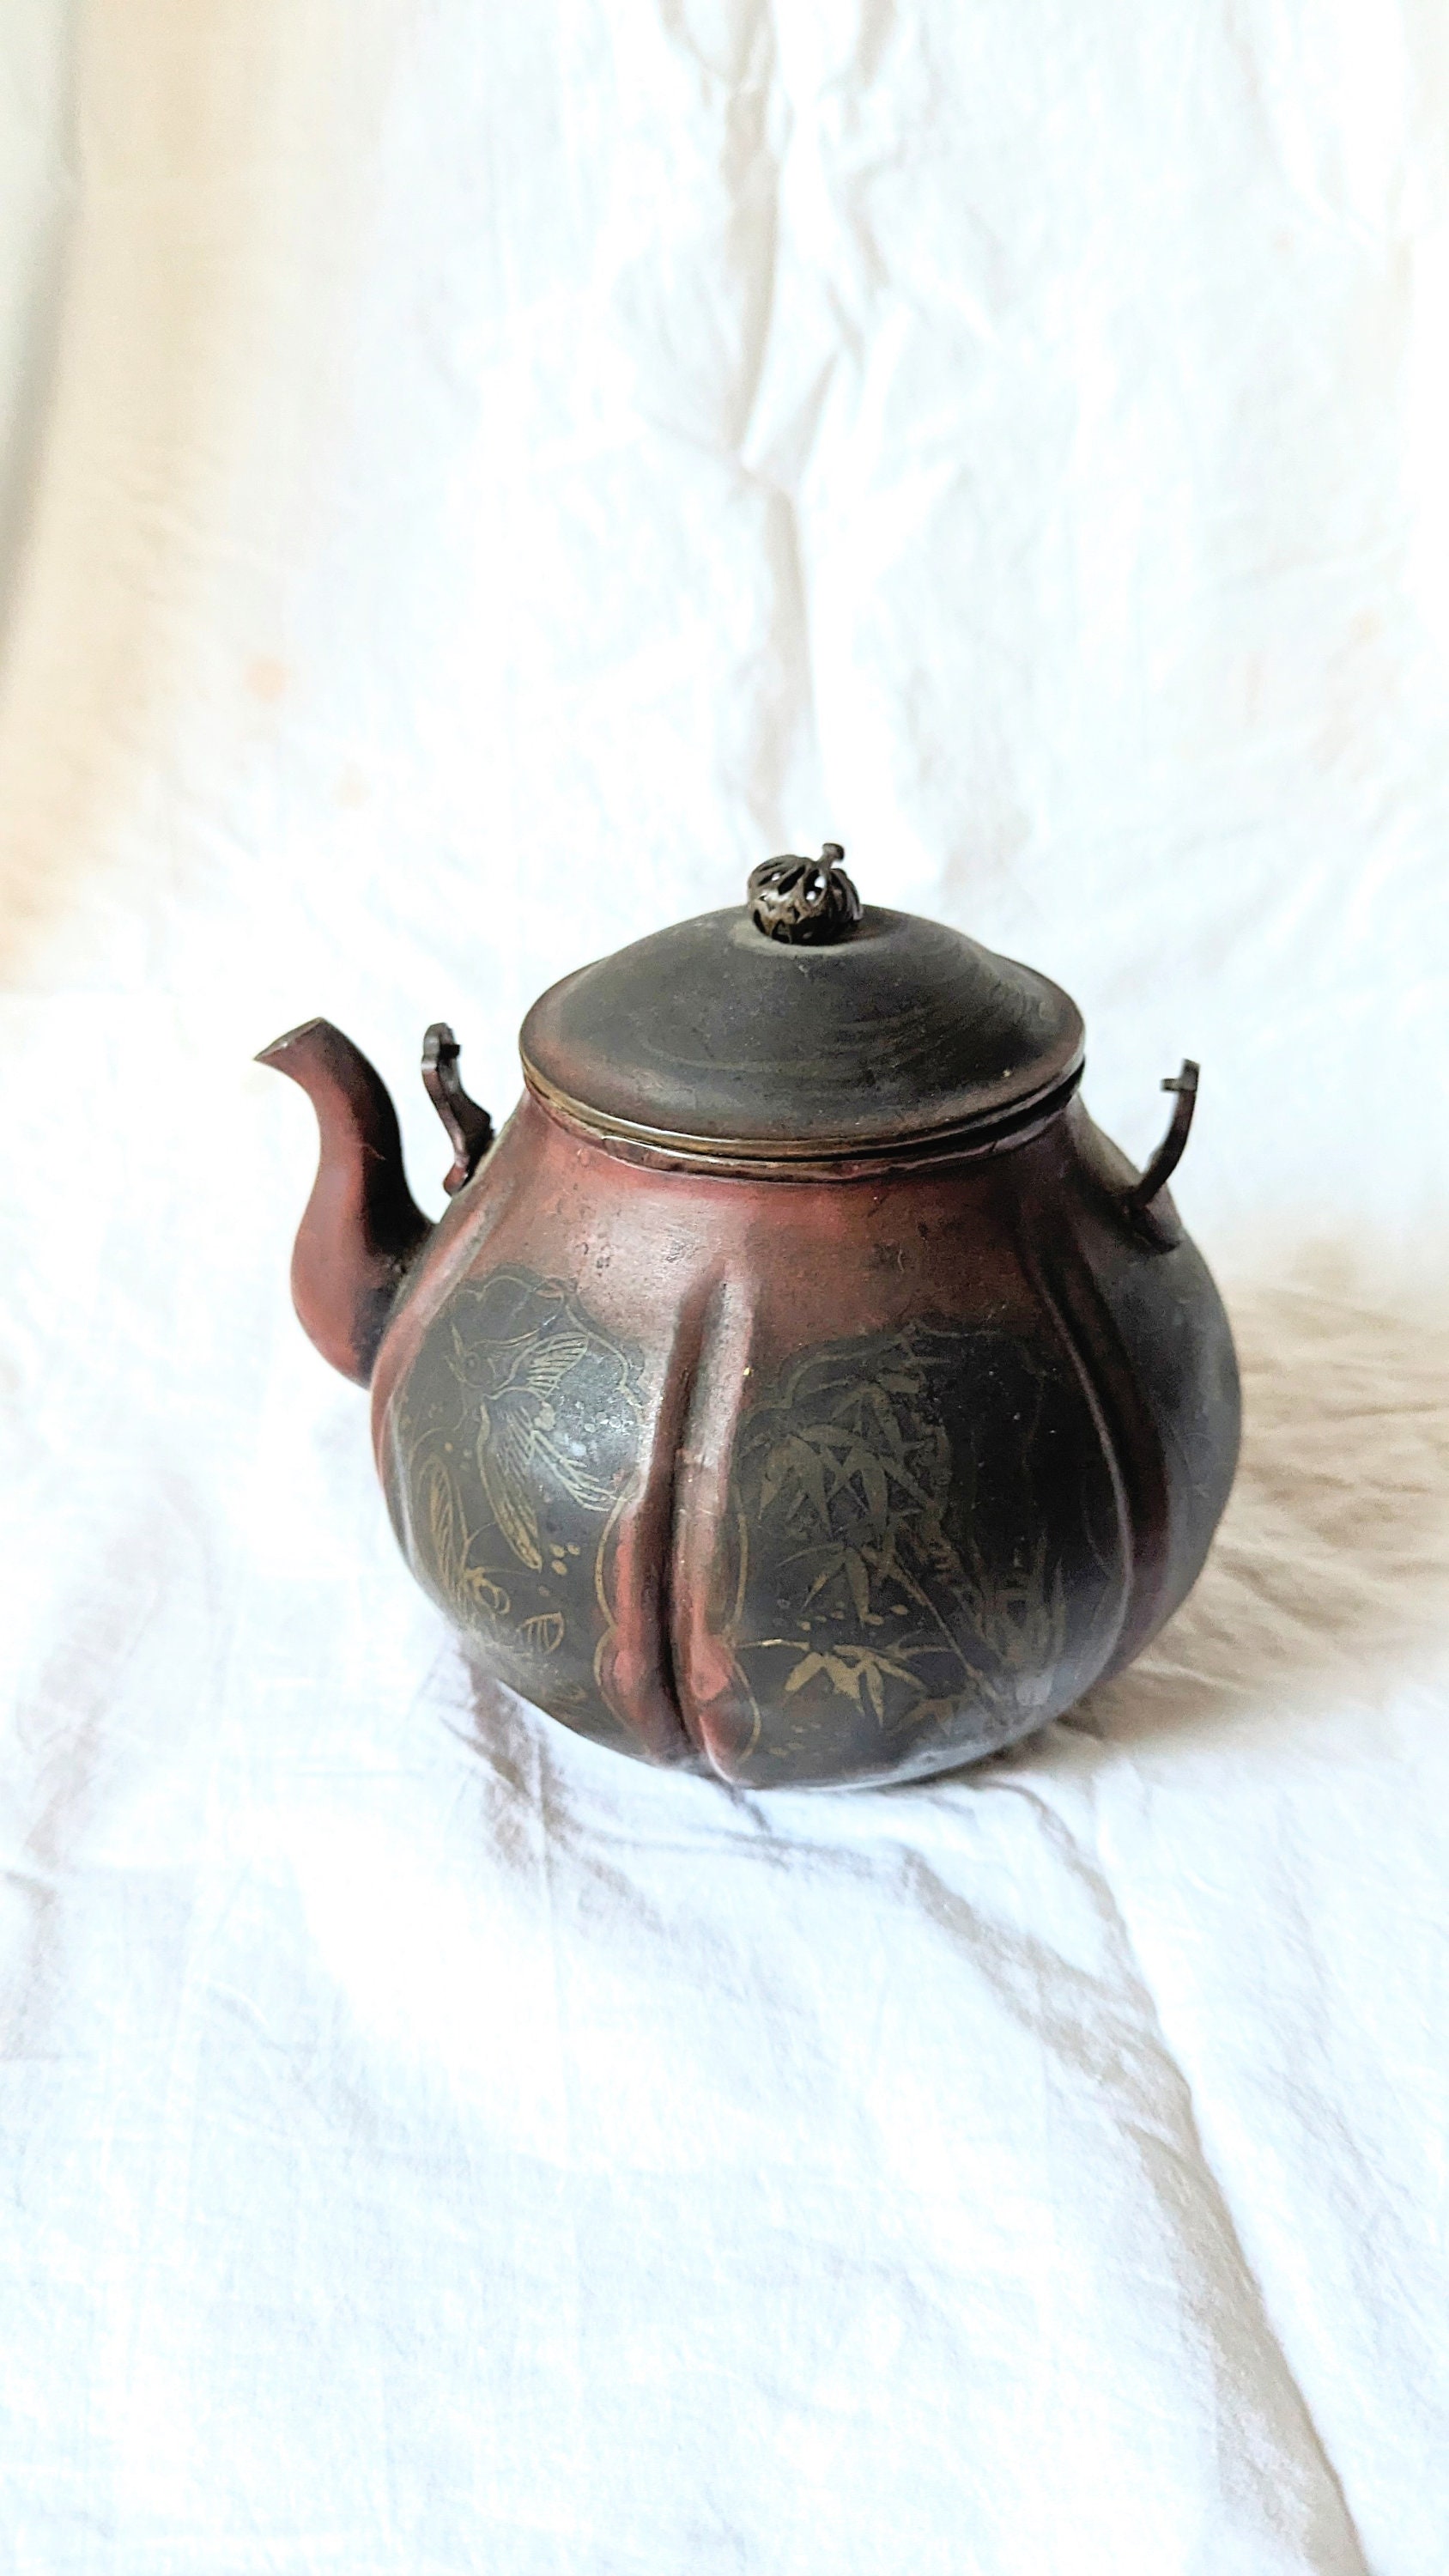 Unique Enamel Brass Teapot, Vintage Kettle With Beautiful Ornate